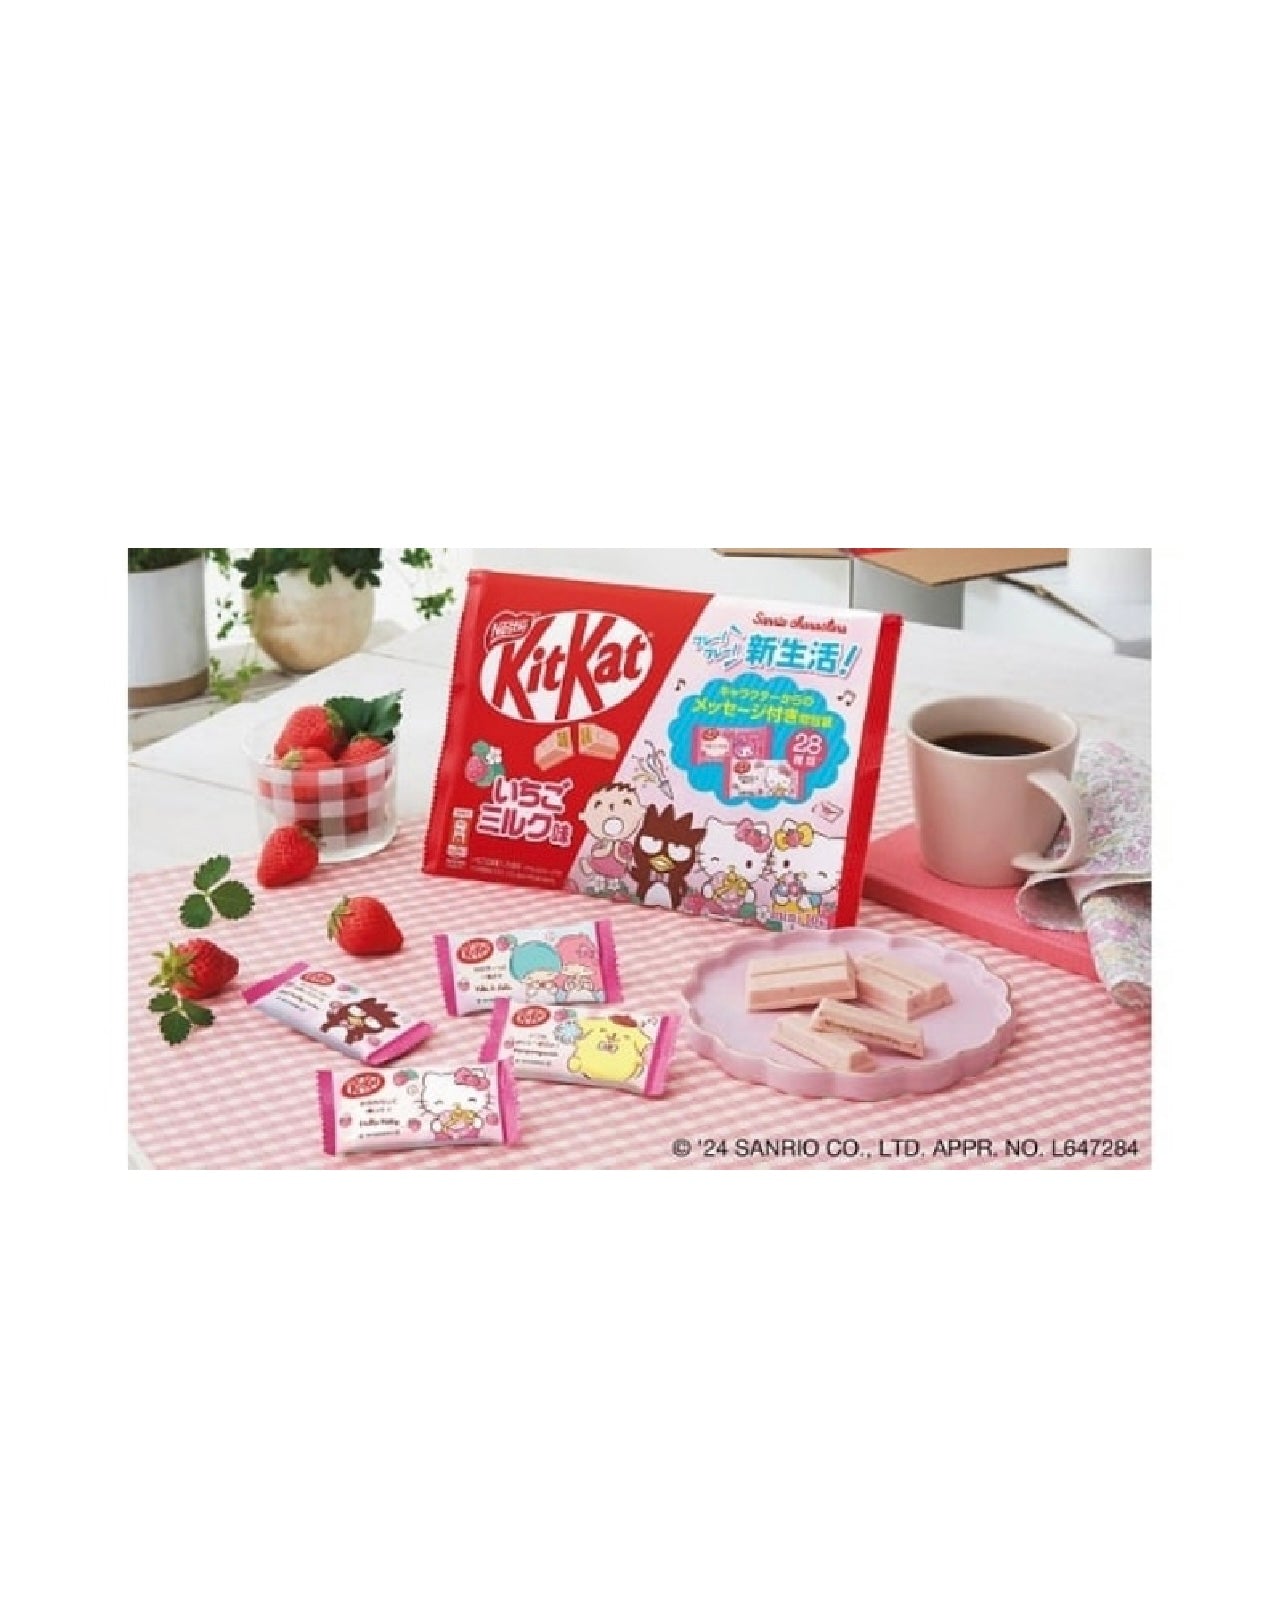 NESTLE JAPAN KIT KAT Sanrio Strawberry Milk Chocolate wafer 11pc